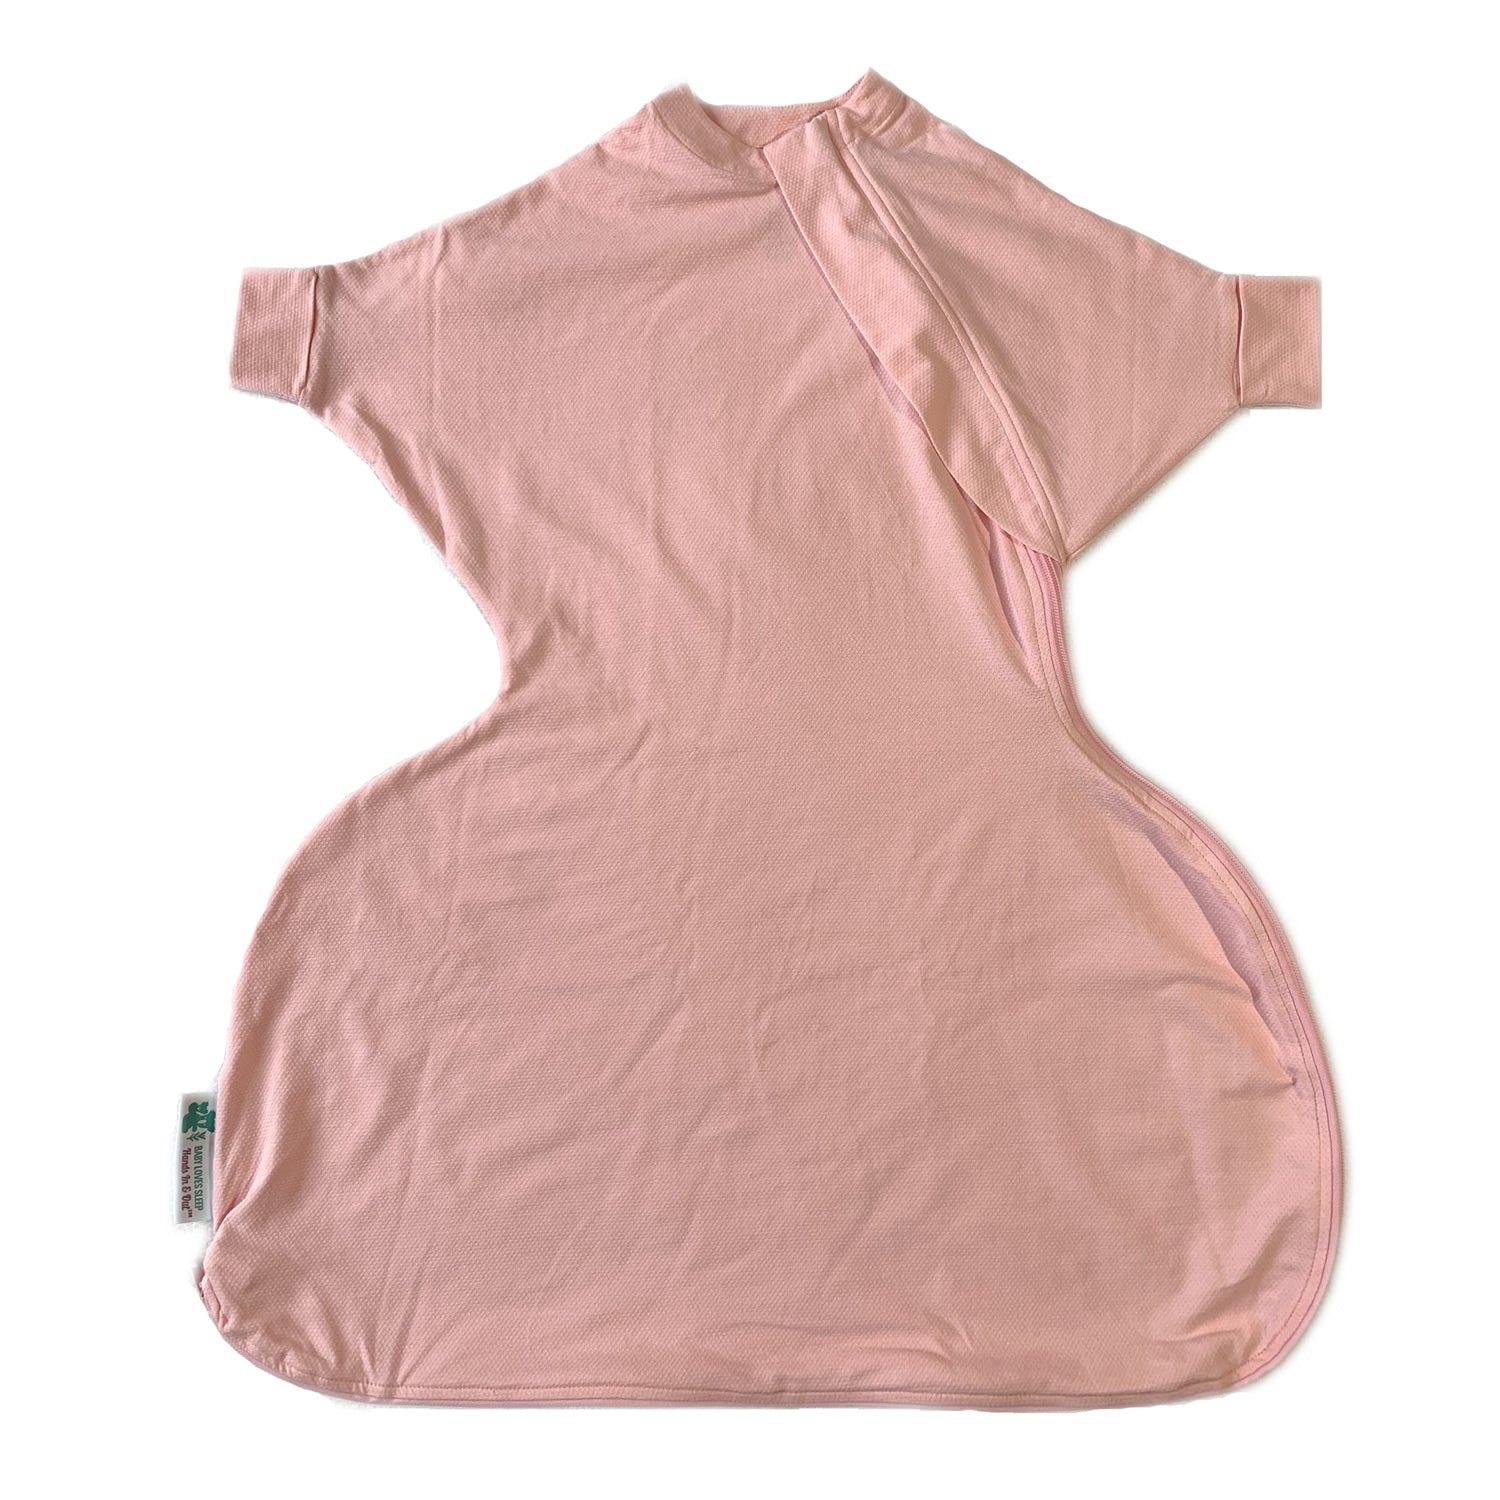 Baby sleep sack for babies needing to wear a hip harness, spica cast or rhino brace